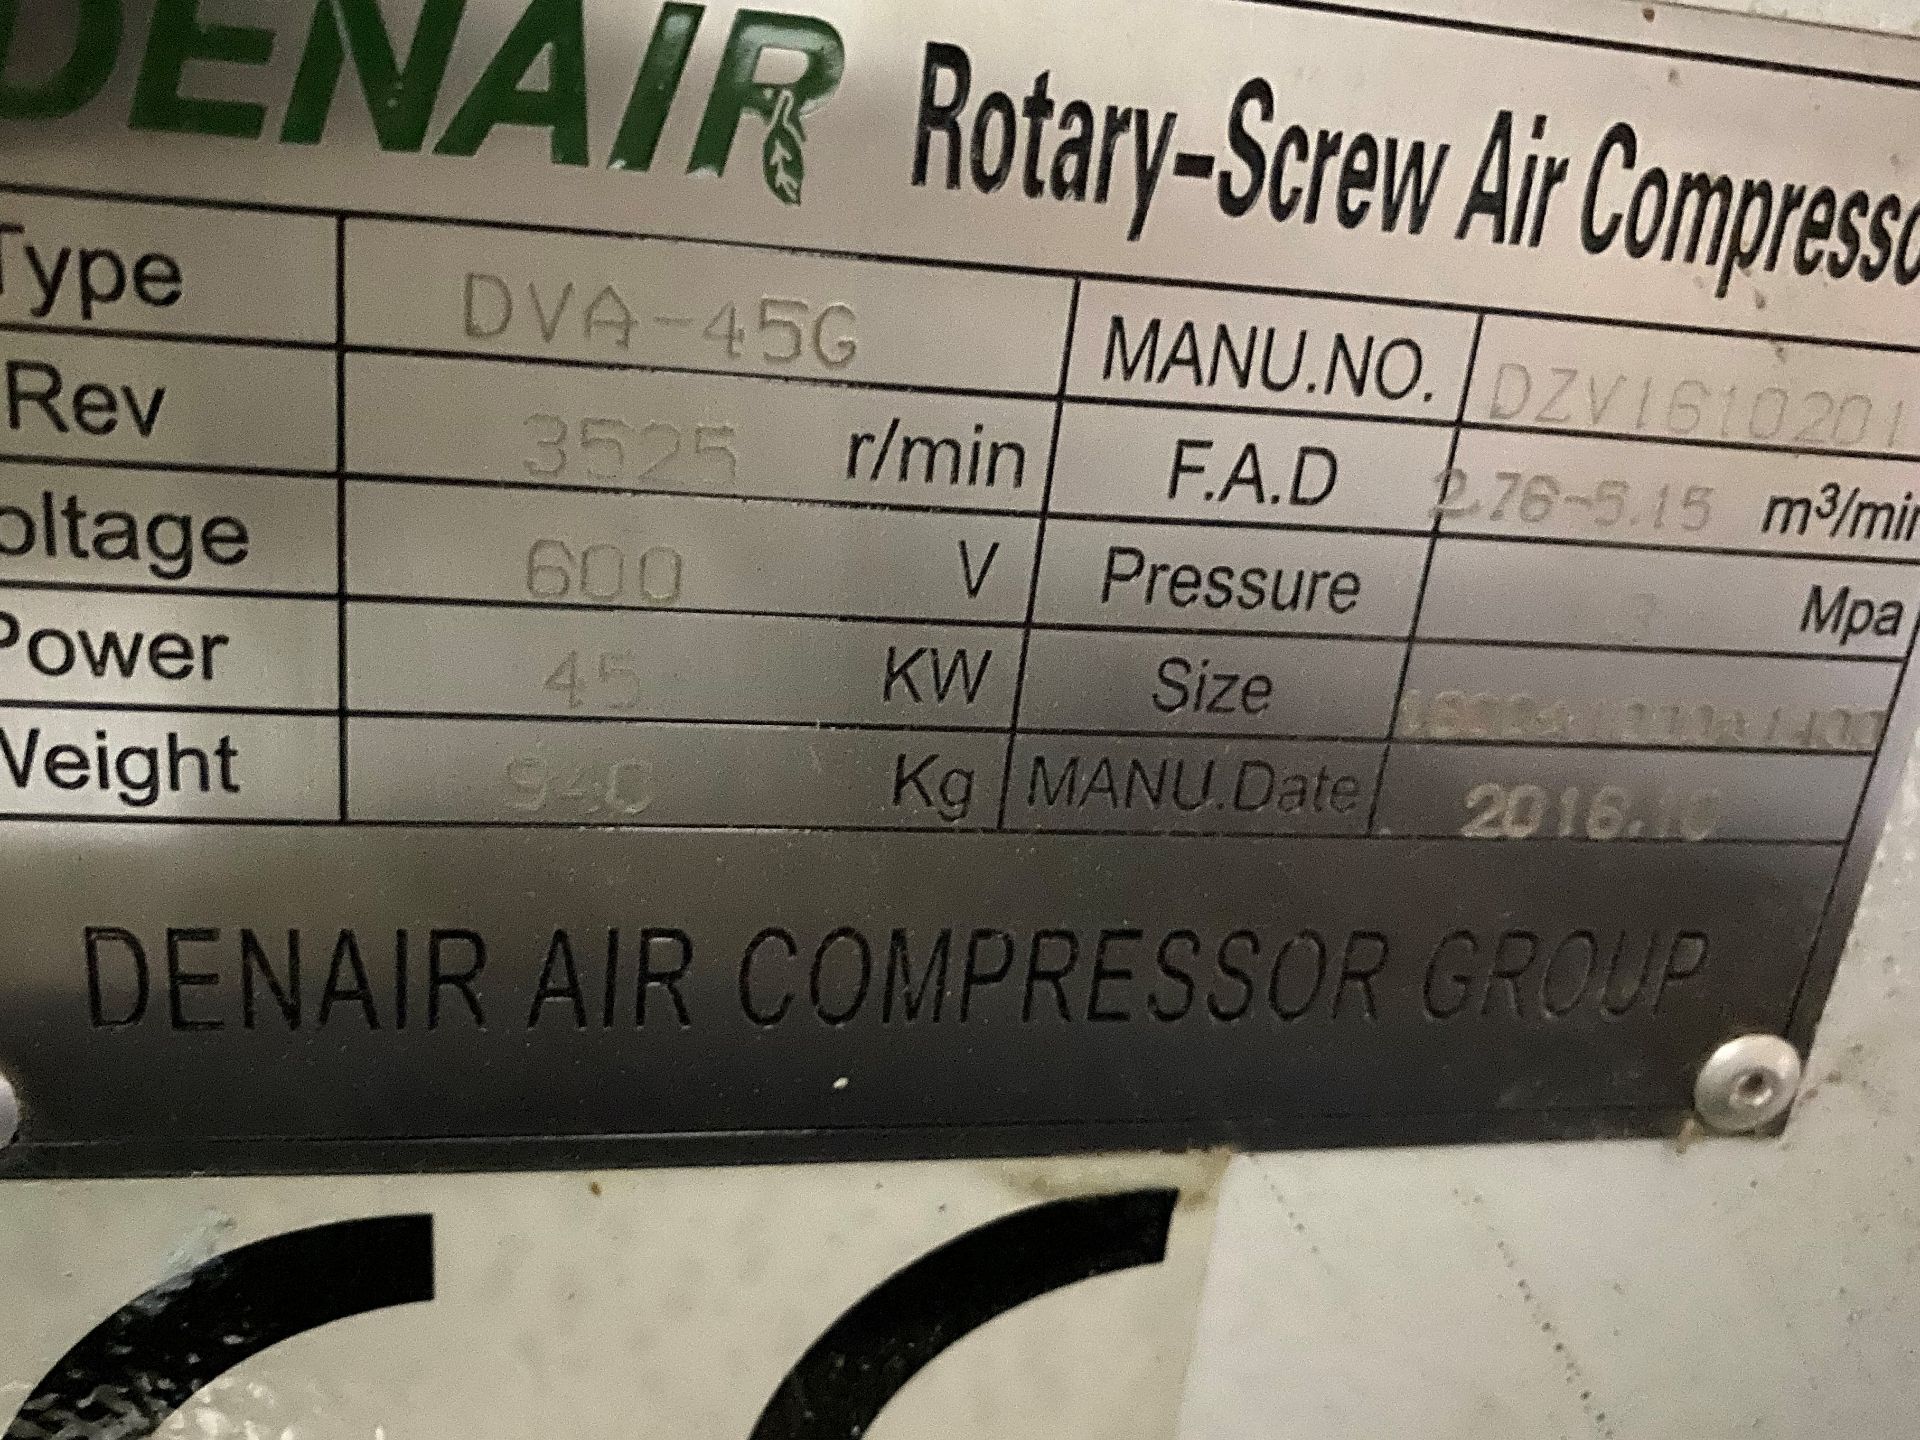 2016 DENAIR 60HP ROTARY SCREW AIR COMPRESSOR, MODEL DVA-45G; 600V; VARIABLE SPEED - Image 5 of 5